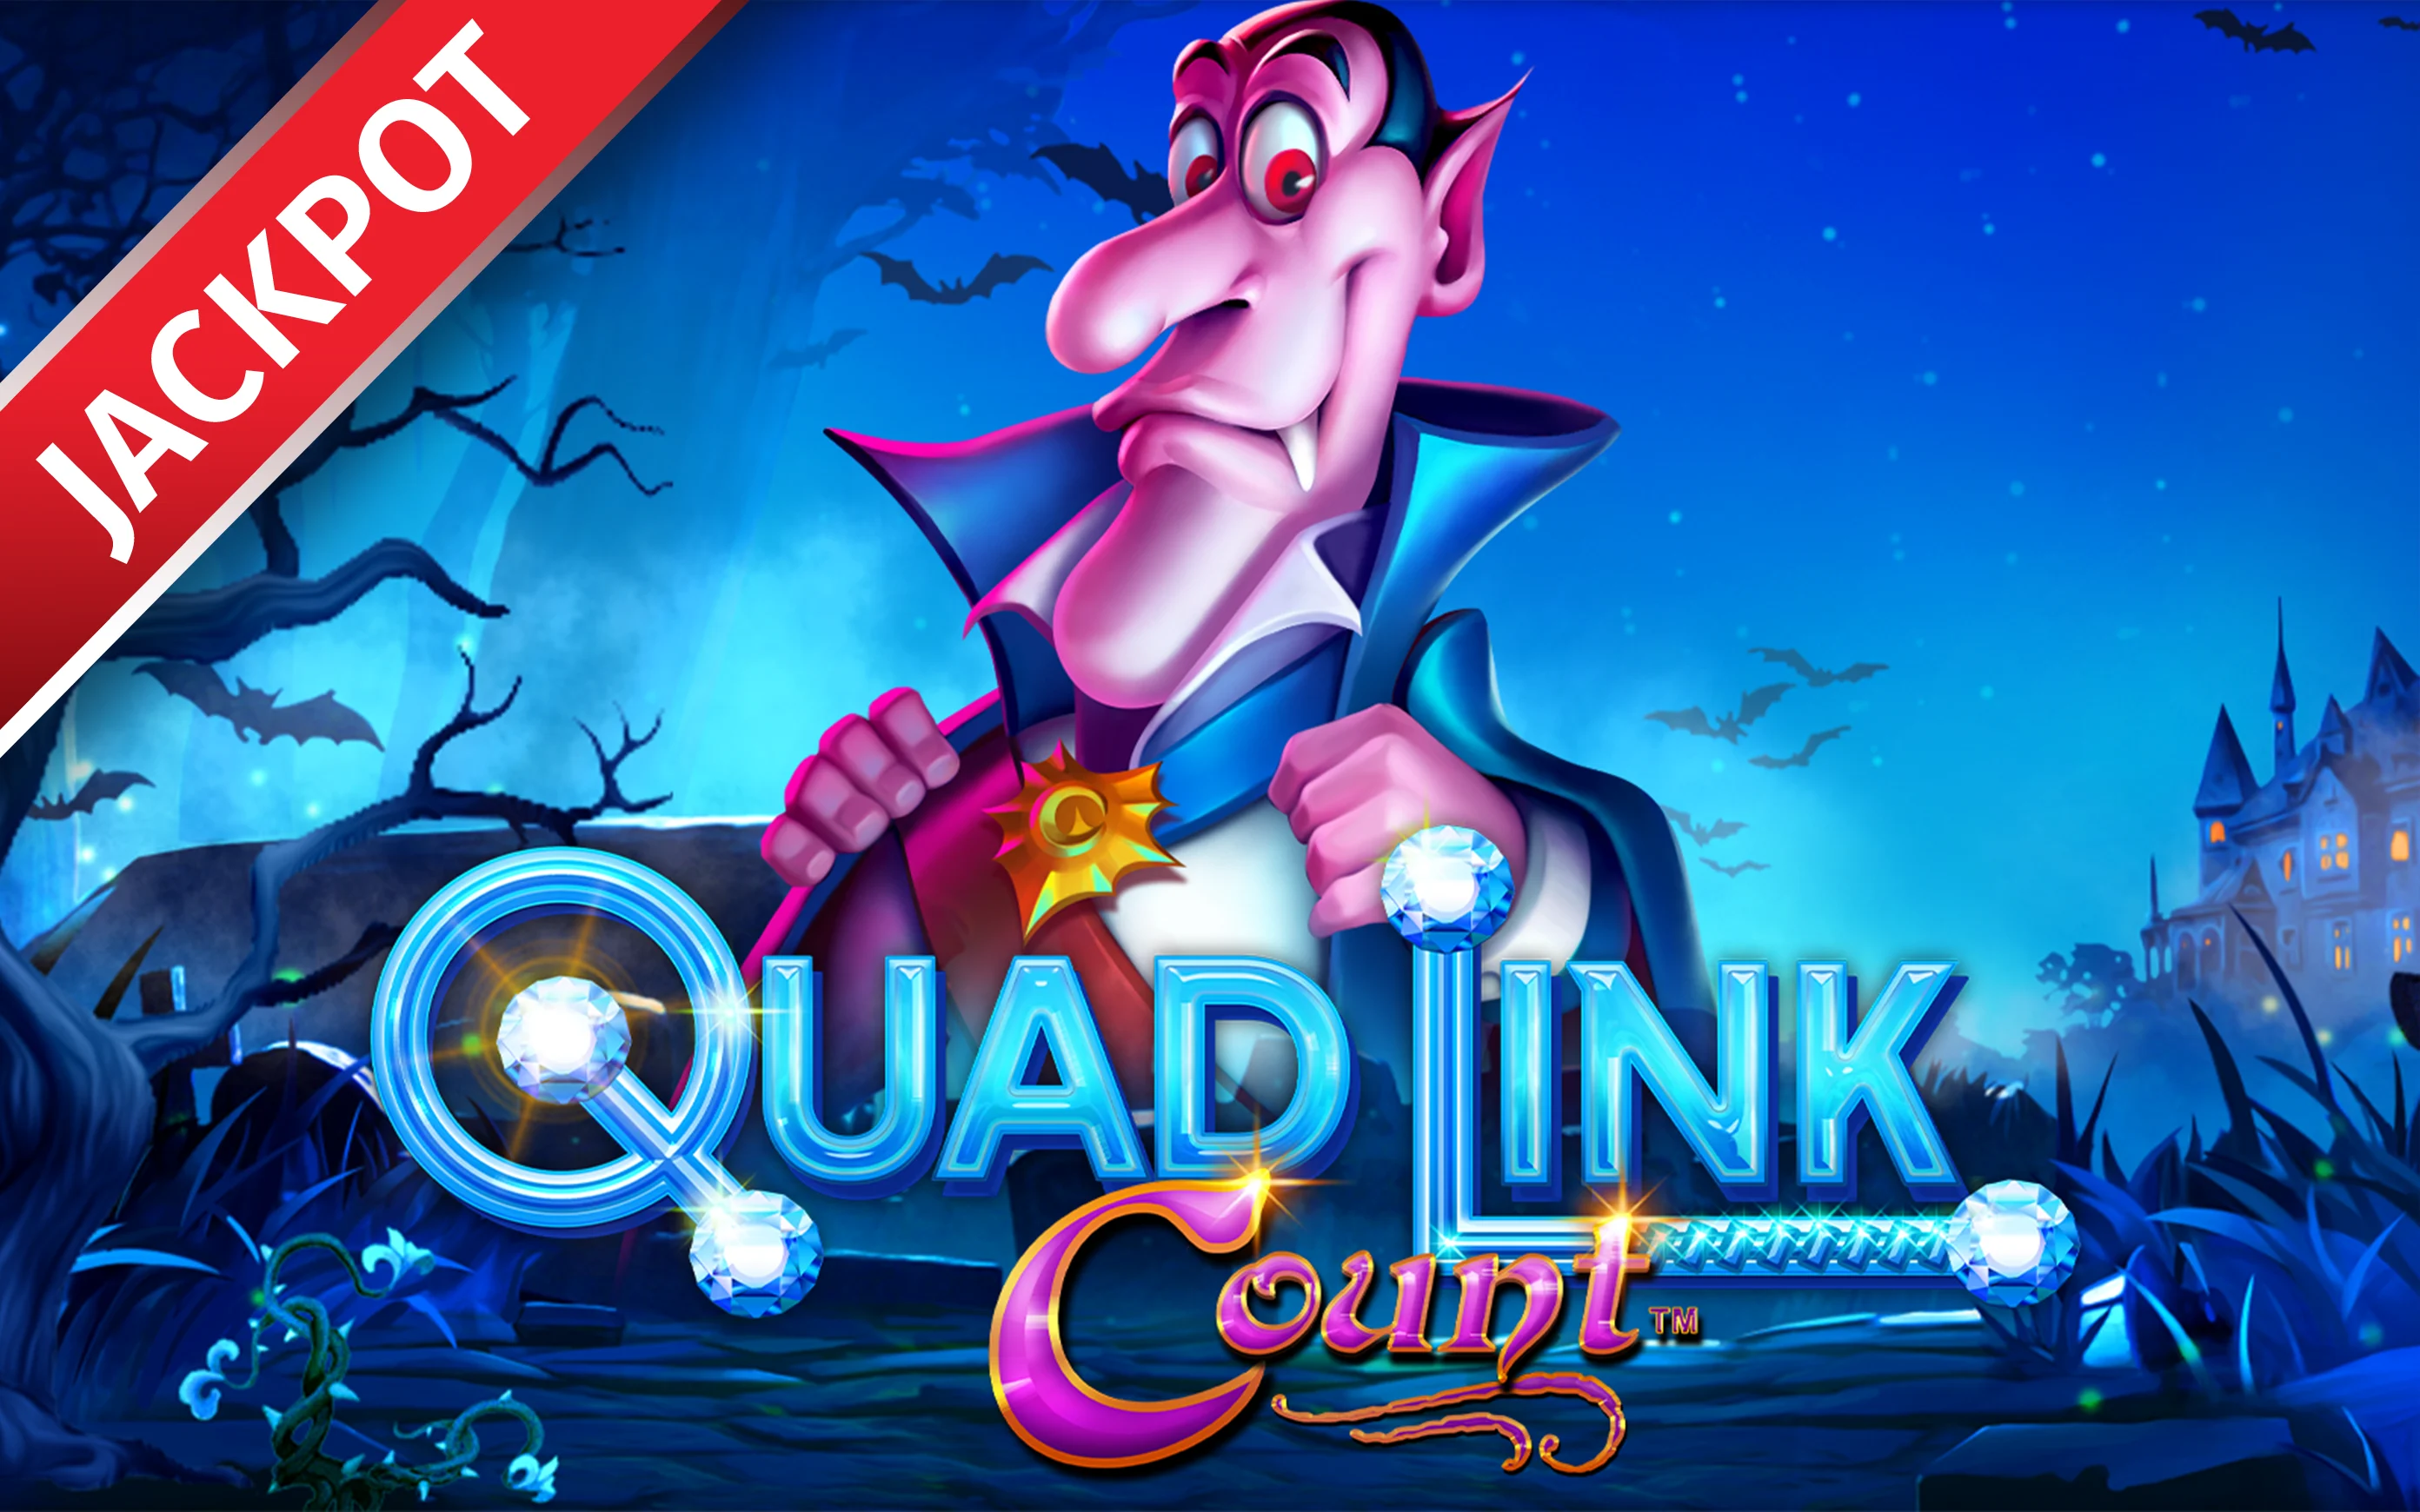 Gioca a Quad Link: Count™ sul casino online Starcasino.be